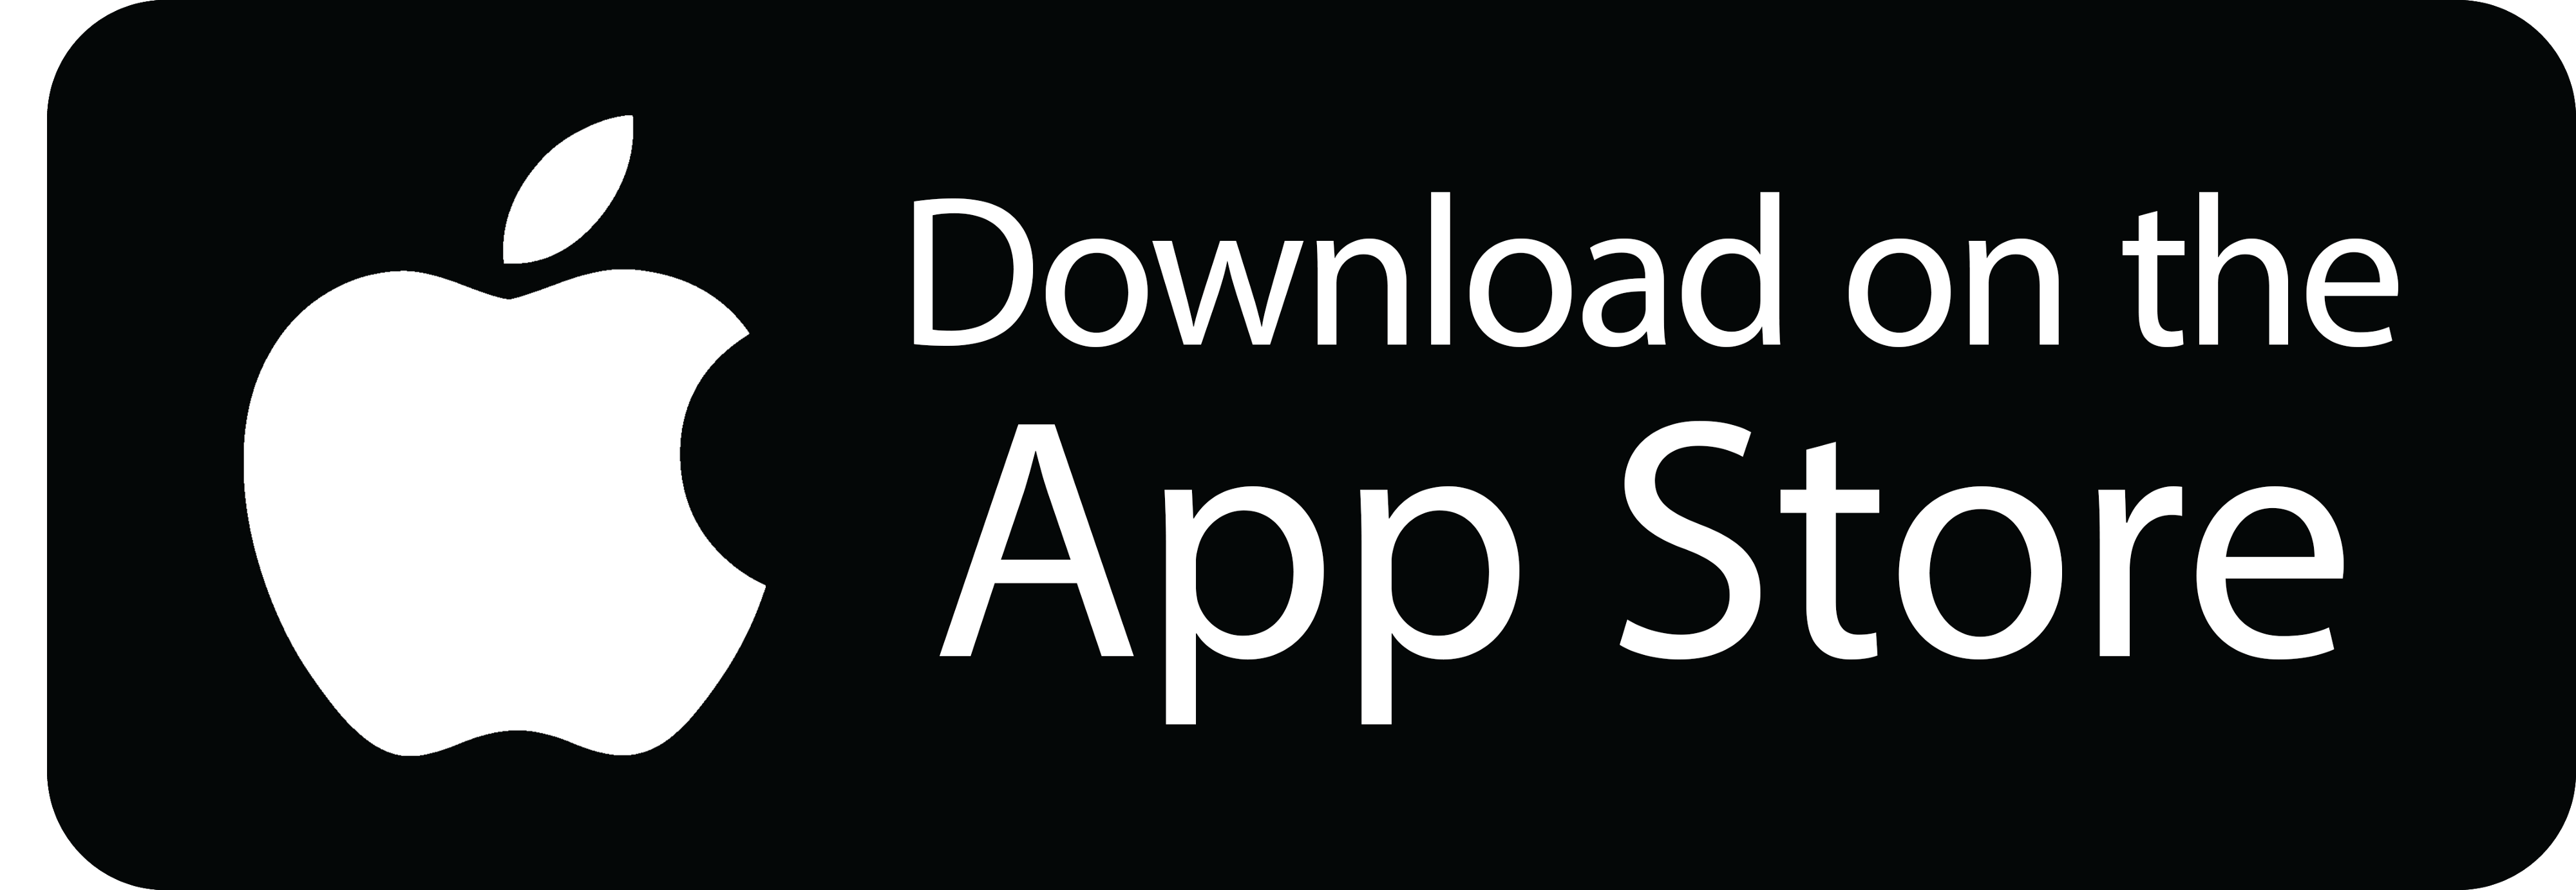 app store download.png